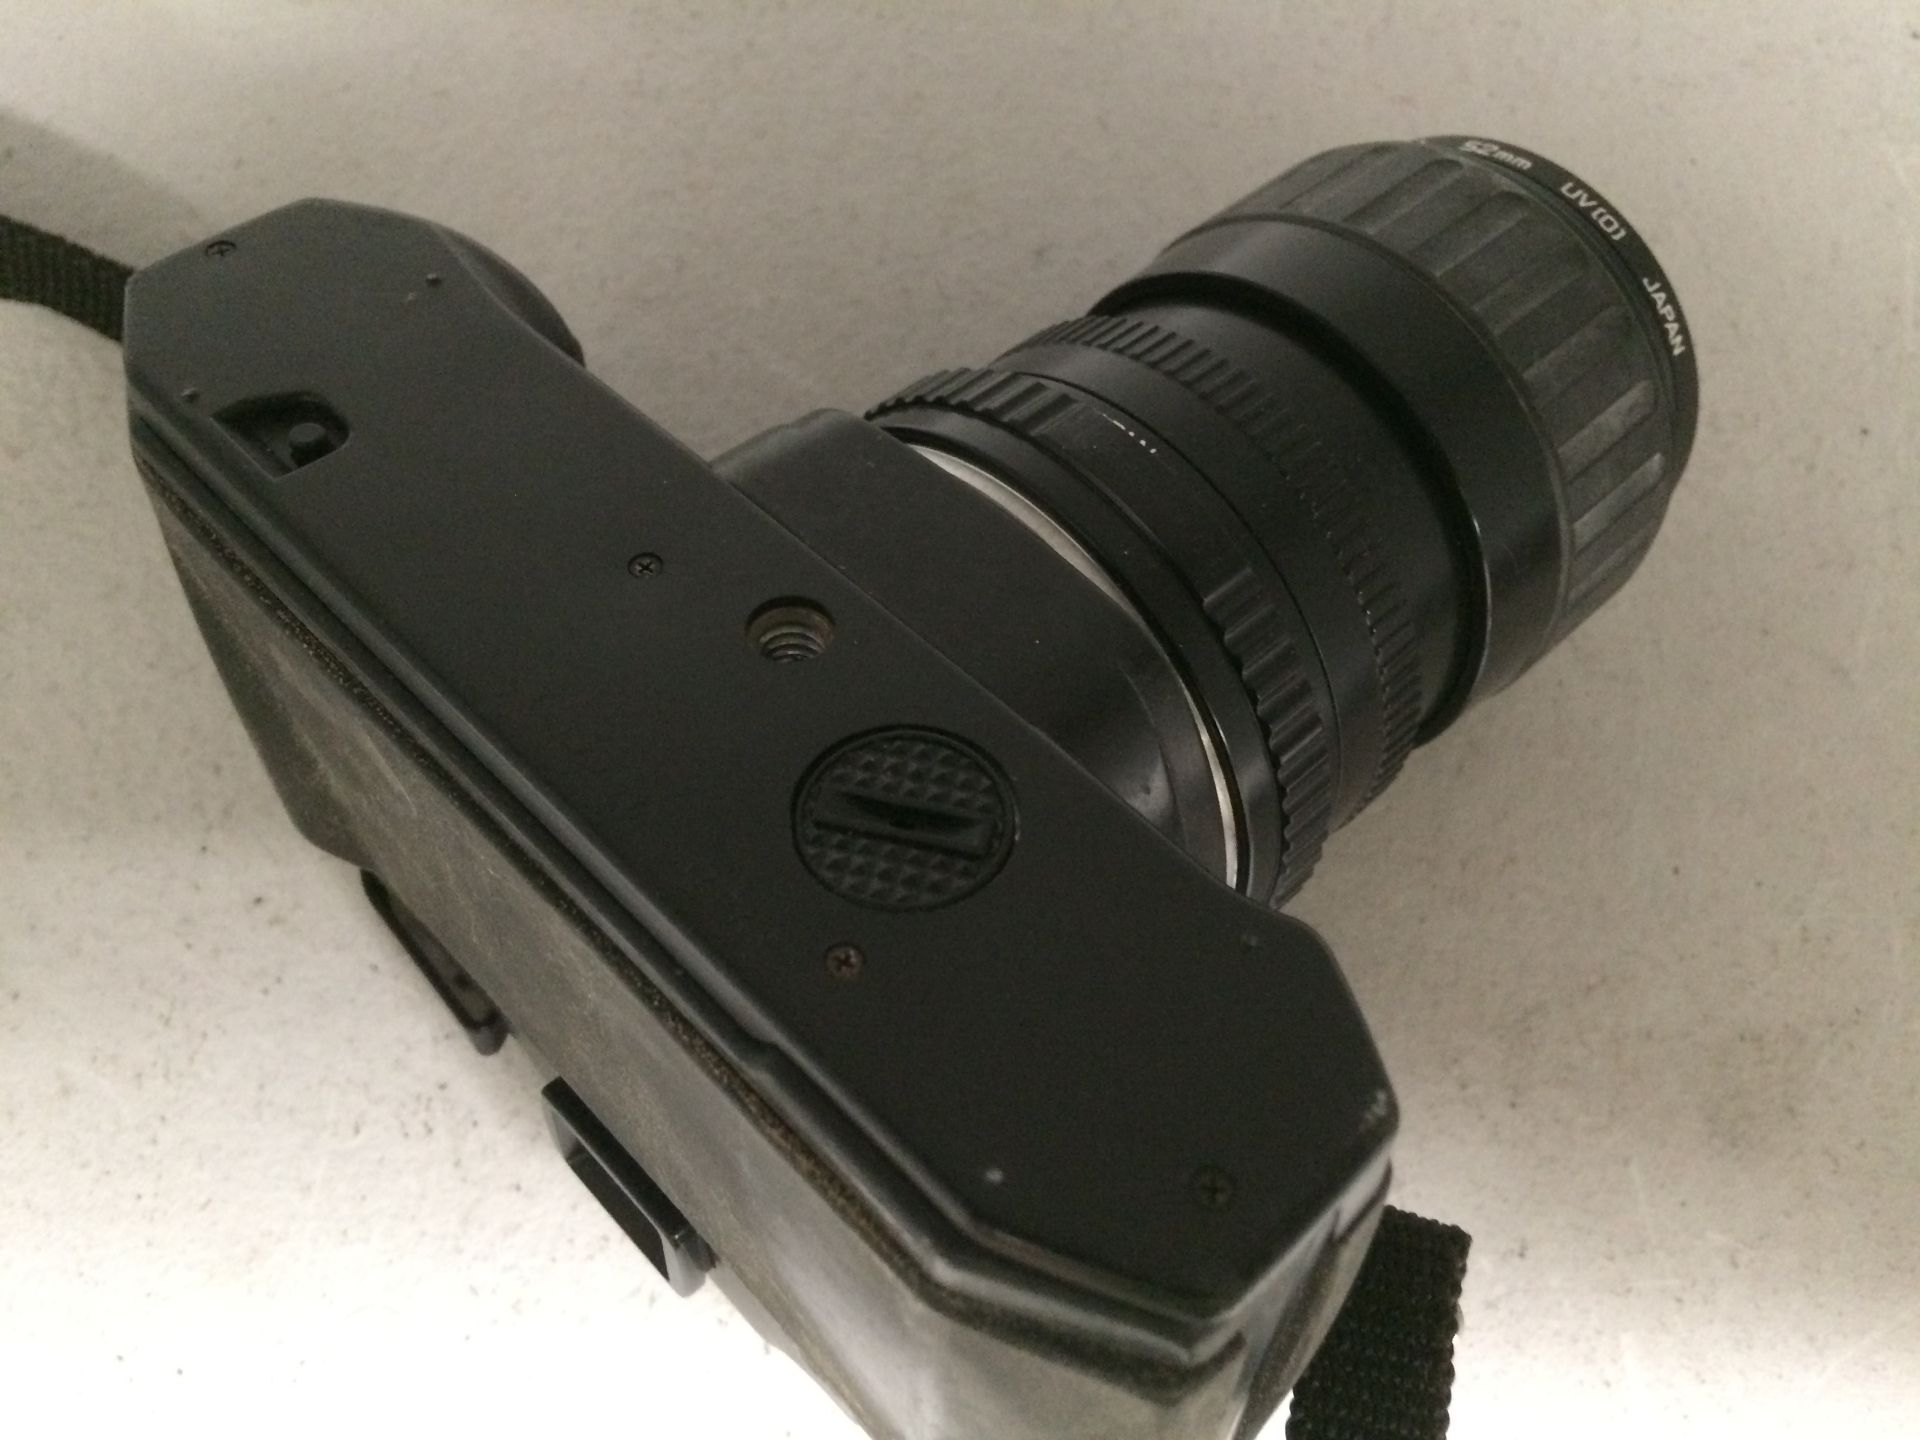 Vivitar V2000 camera with a Macro focusing zoom 28-70mm lens - Image 4 of 4